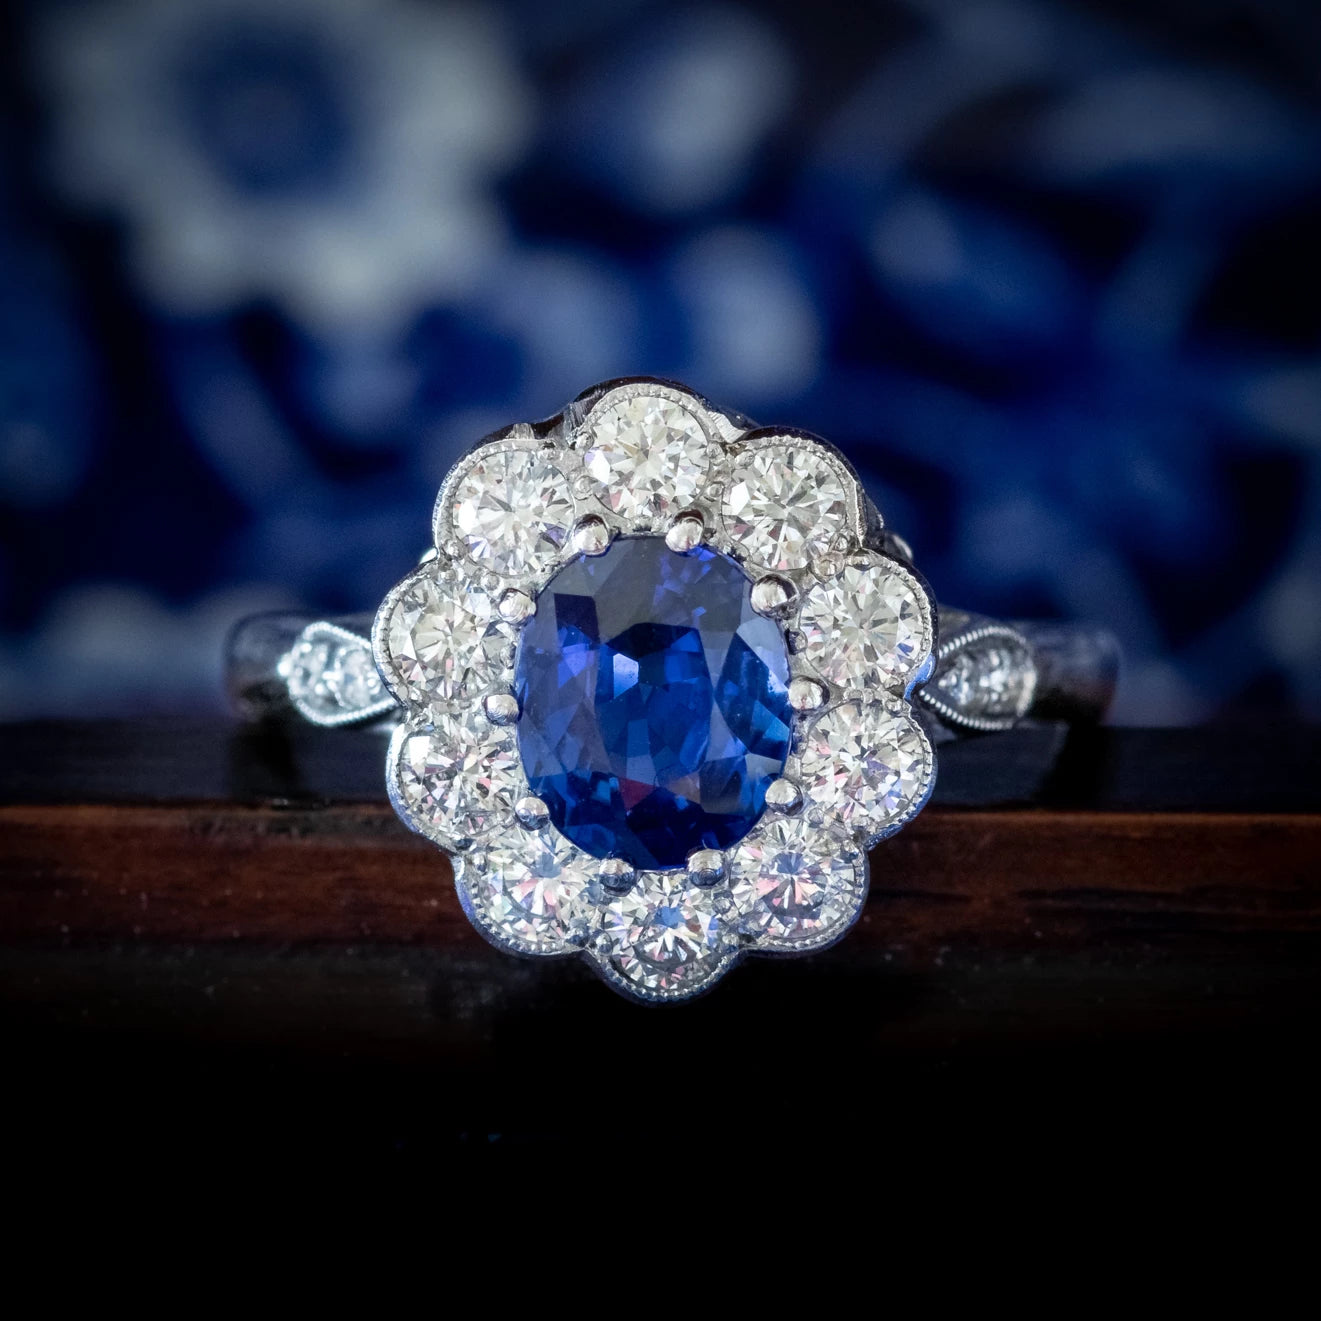 Antique Sapphire Engagement Ring